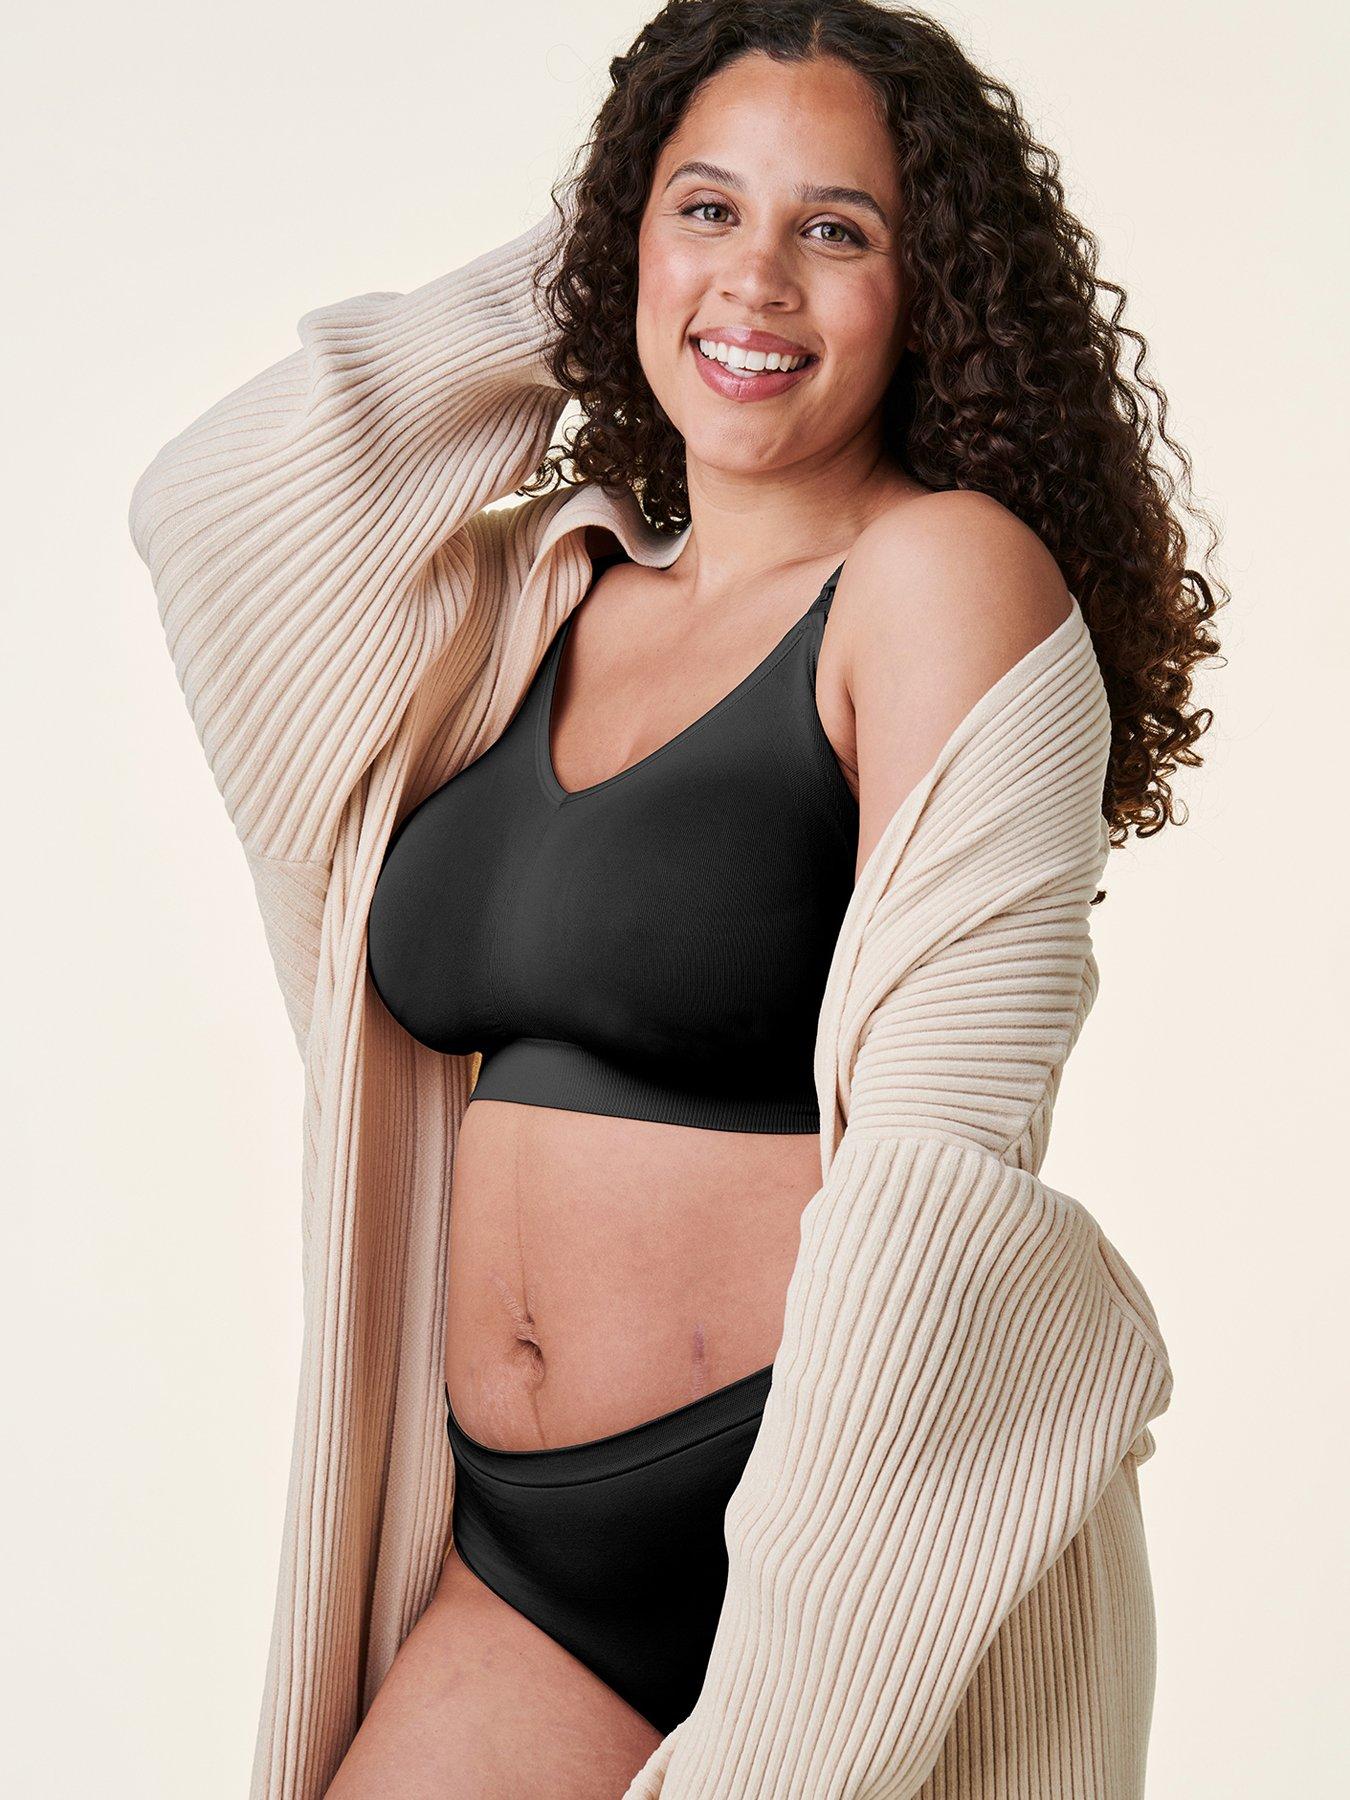 Bravado Designs Women's Body Silk Seamless Black Size Medium - Full Cup  4sco for sale online